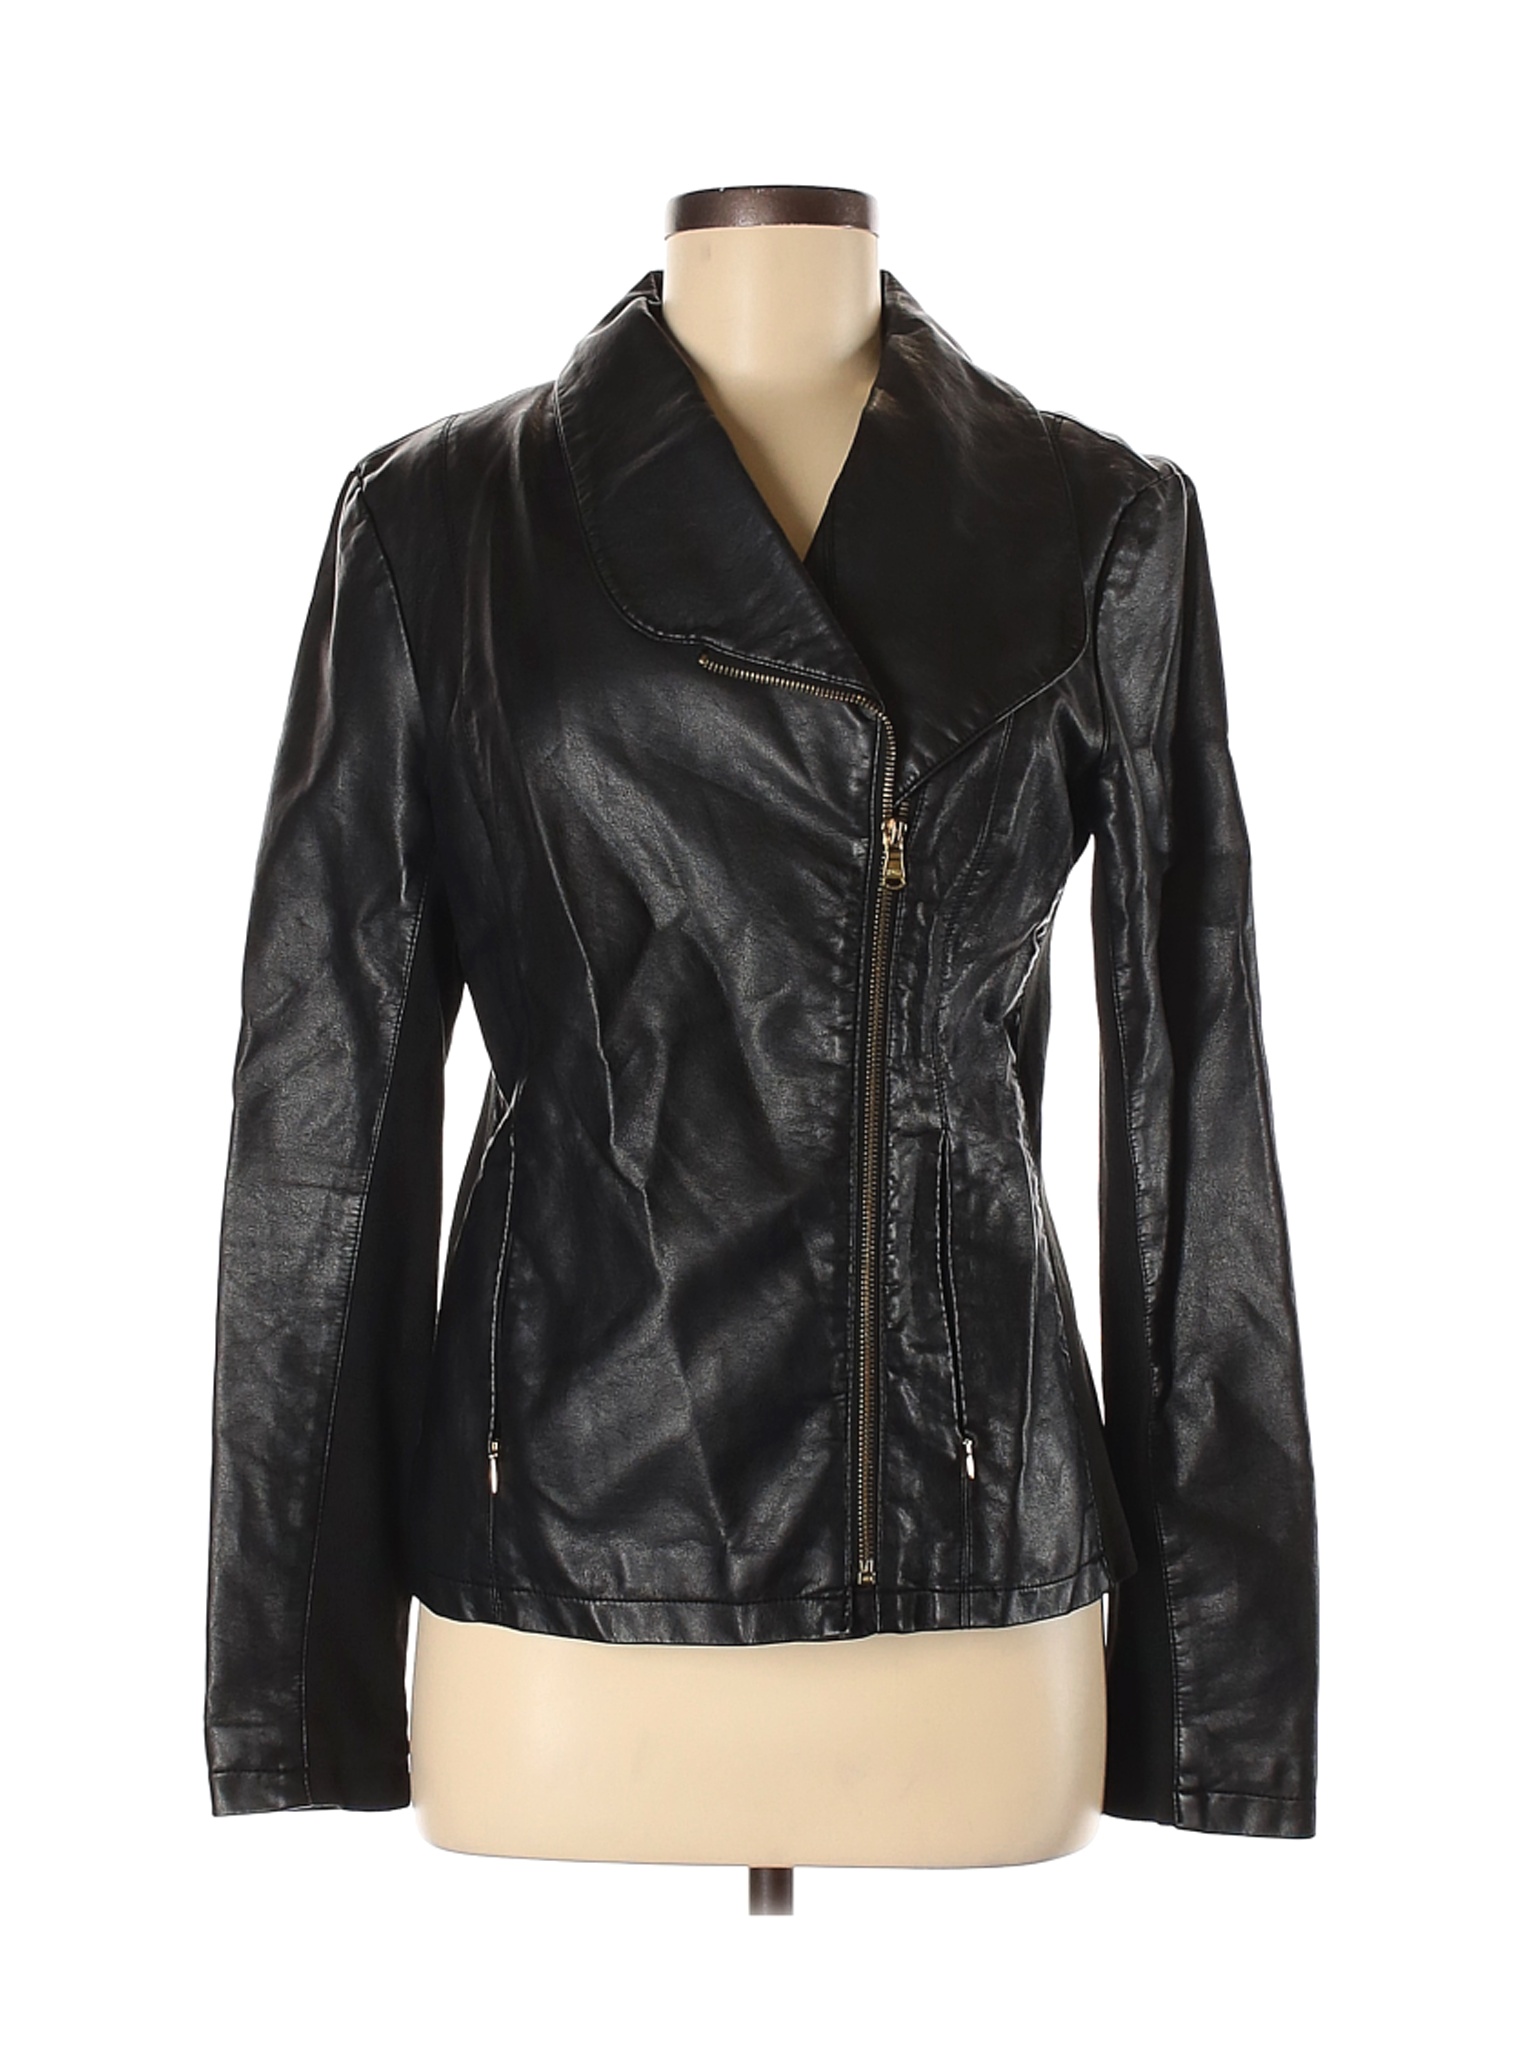 Marc New York Women Black Faux Leather Jacket M | eBay